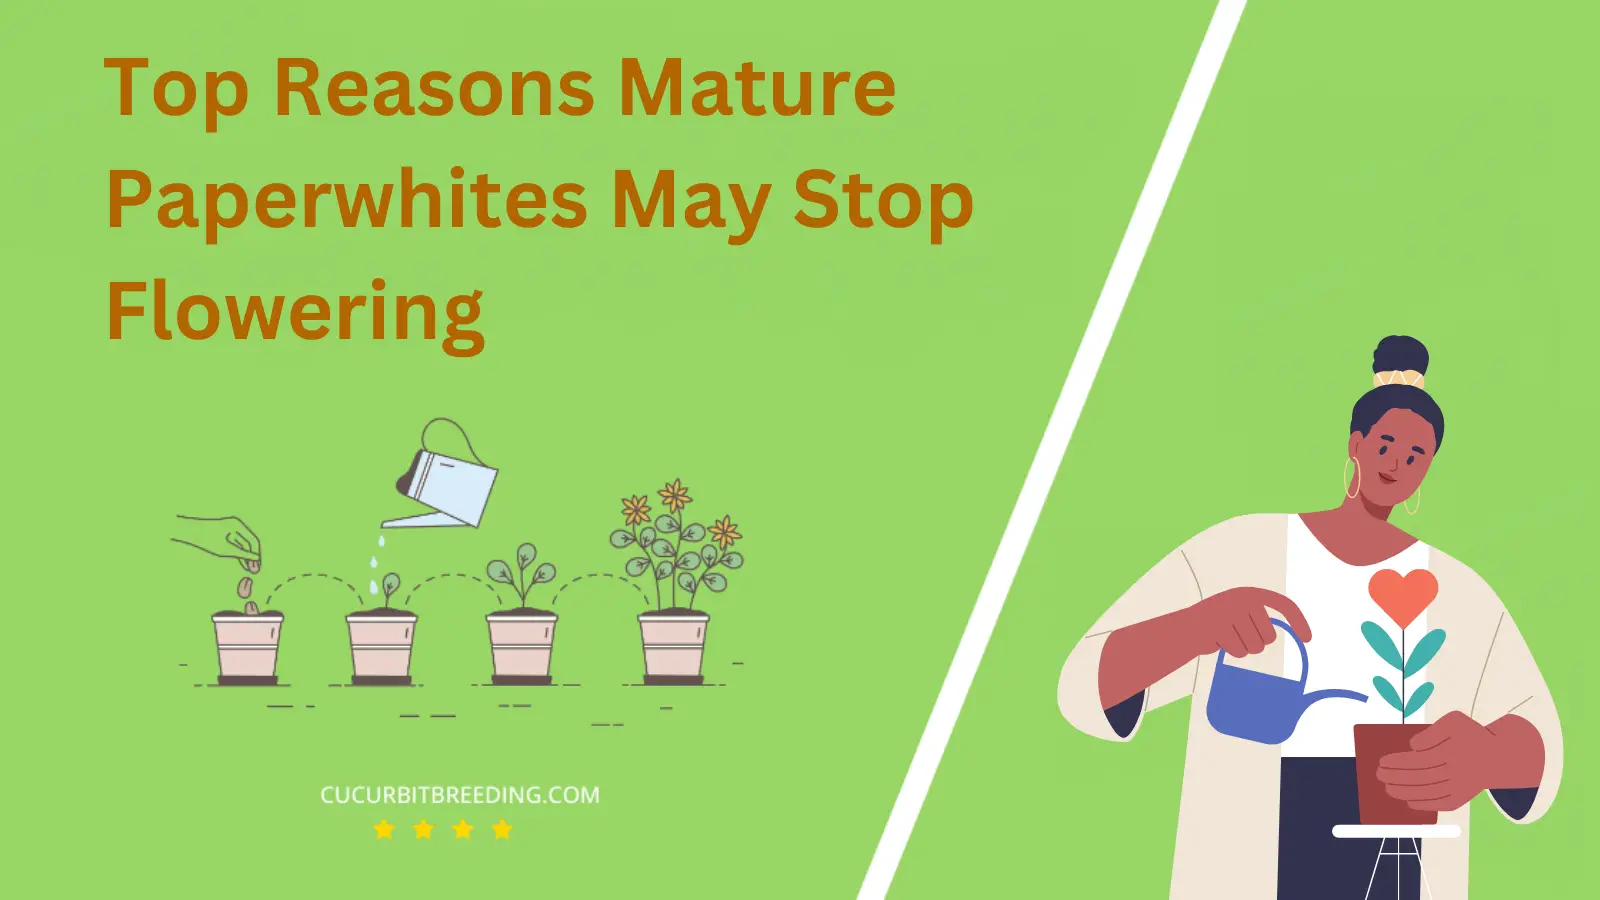 Top Reasons Mature Paperwhites May Stop Flowering